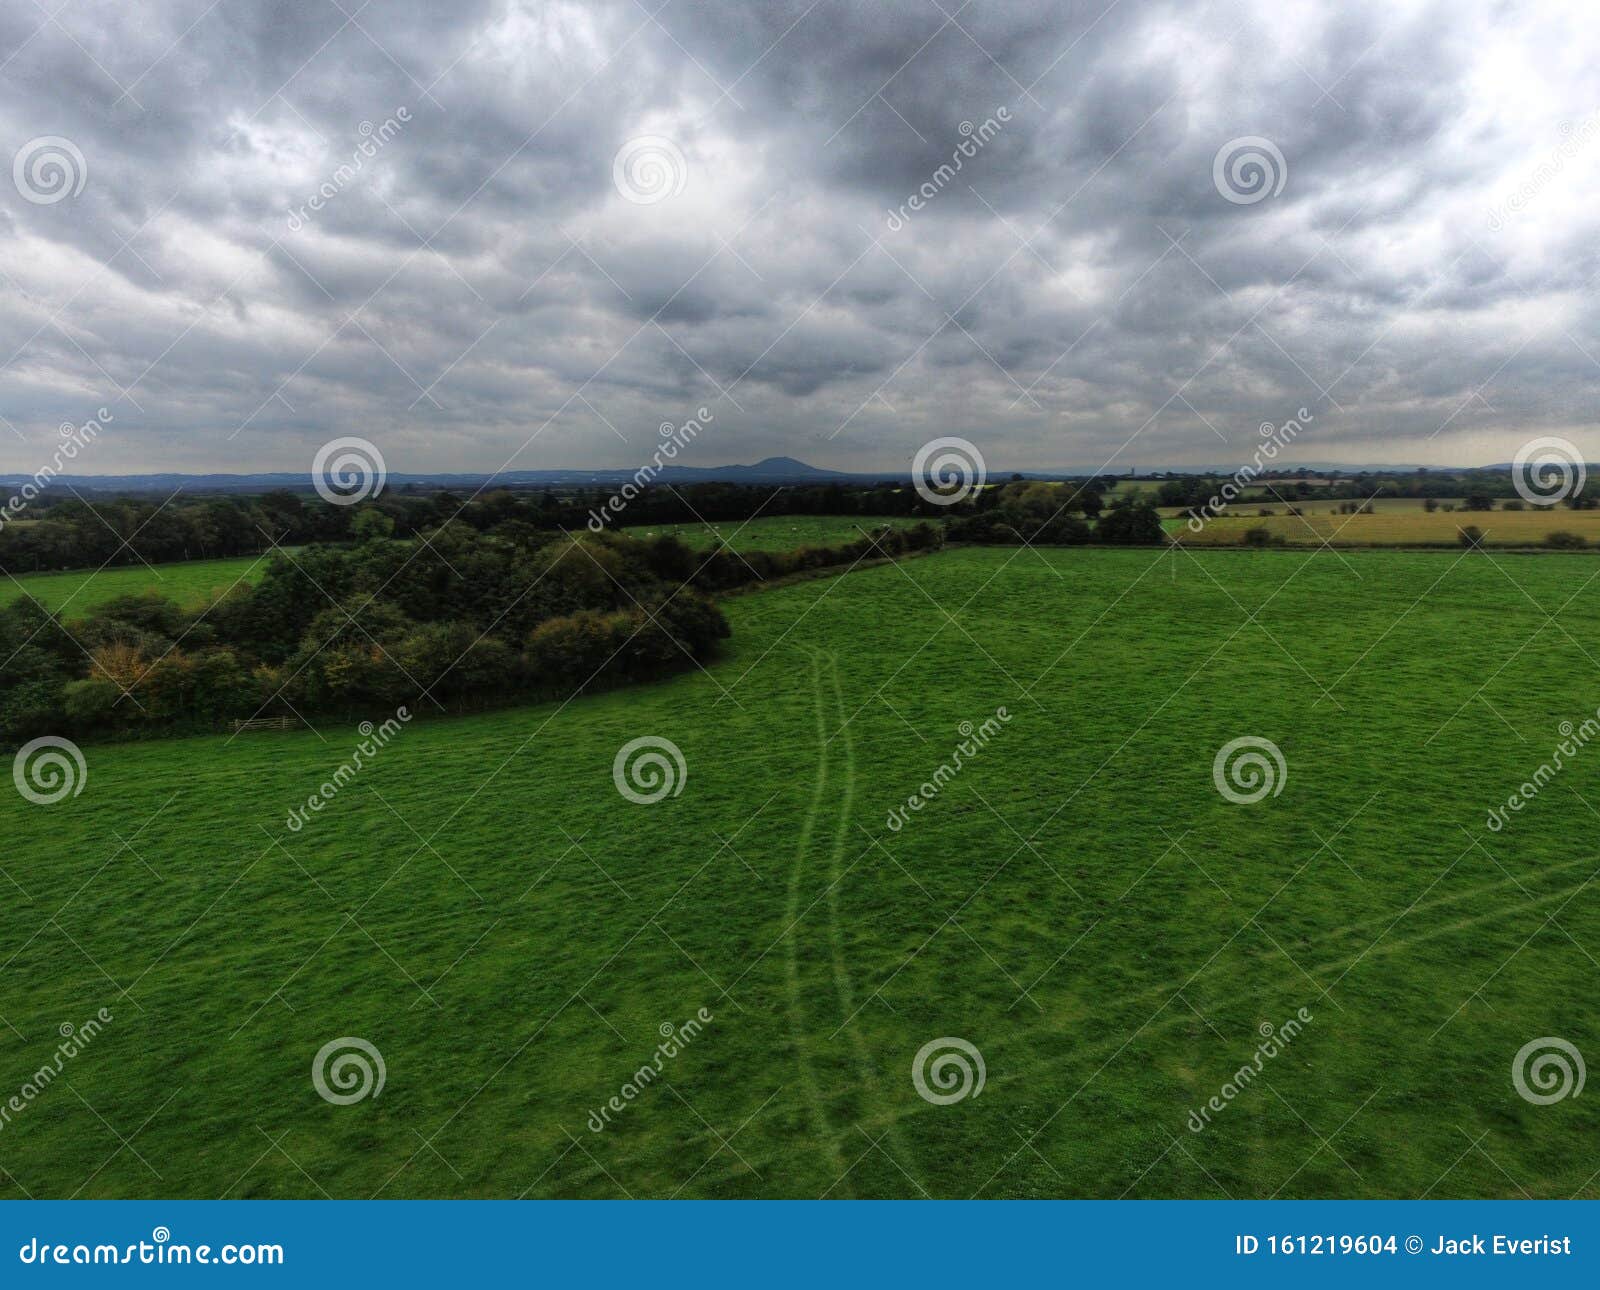 rain over the wrekin drone image